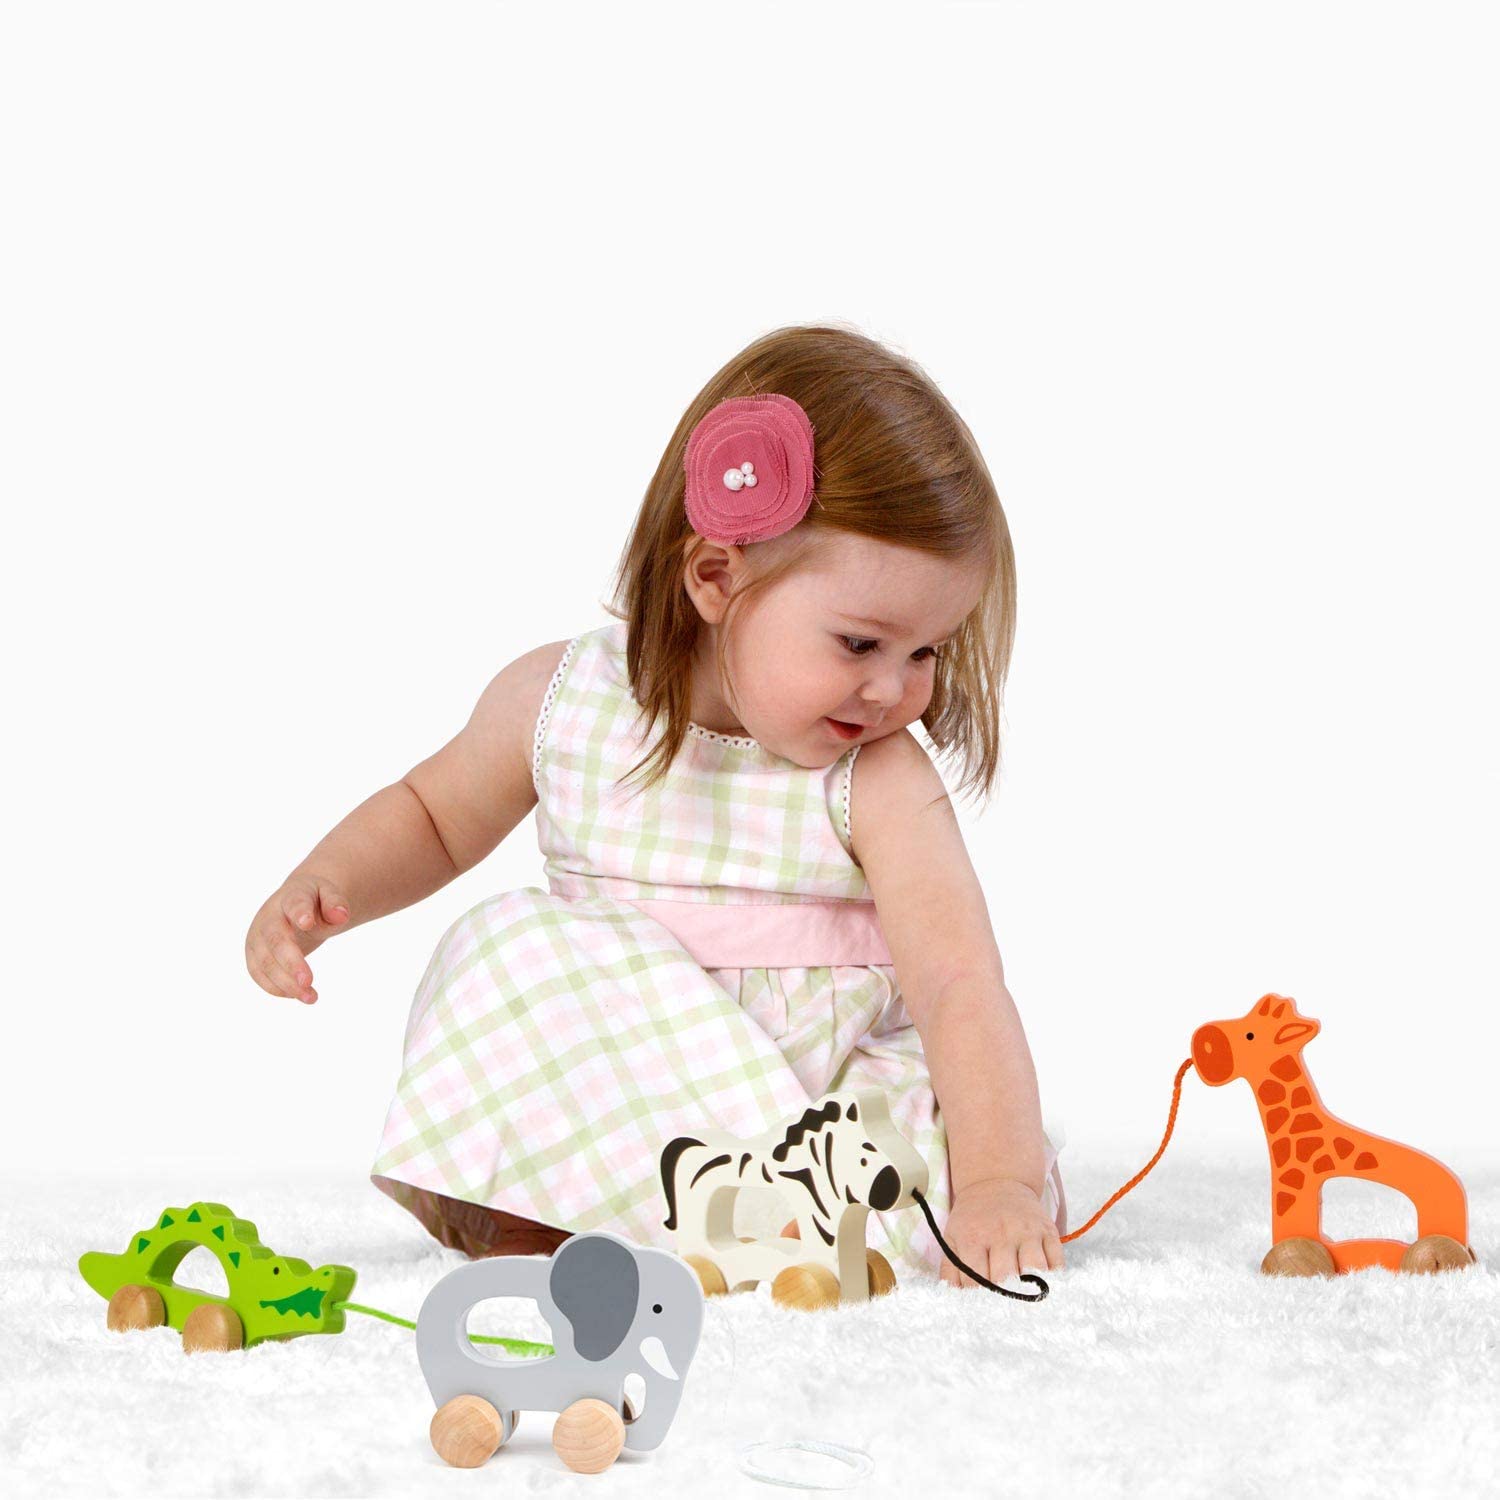 (Elephant) - Hape Elephant Wooden Push and Pull Toddler Toy,Grey - image 3 of 6